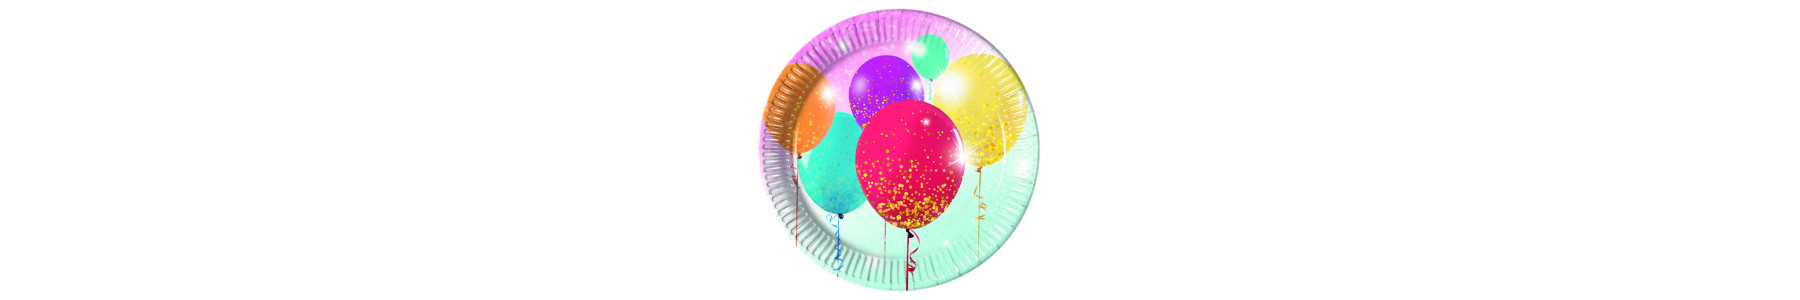 Acceosrii de petrecere Glittering balloons